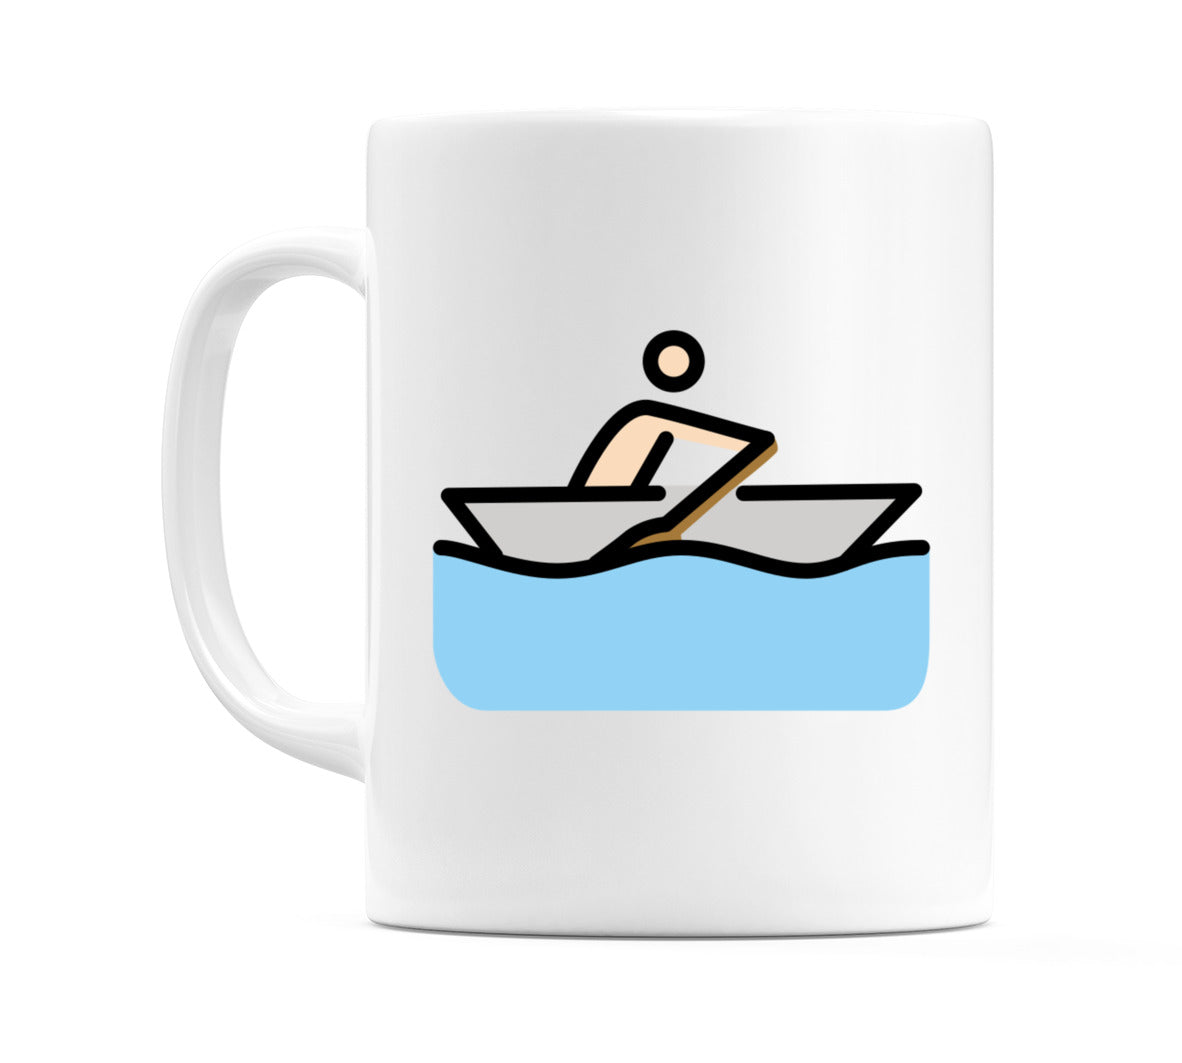 Person Rowing Boat: Light Skin Tone Emoji Mug